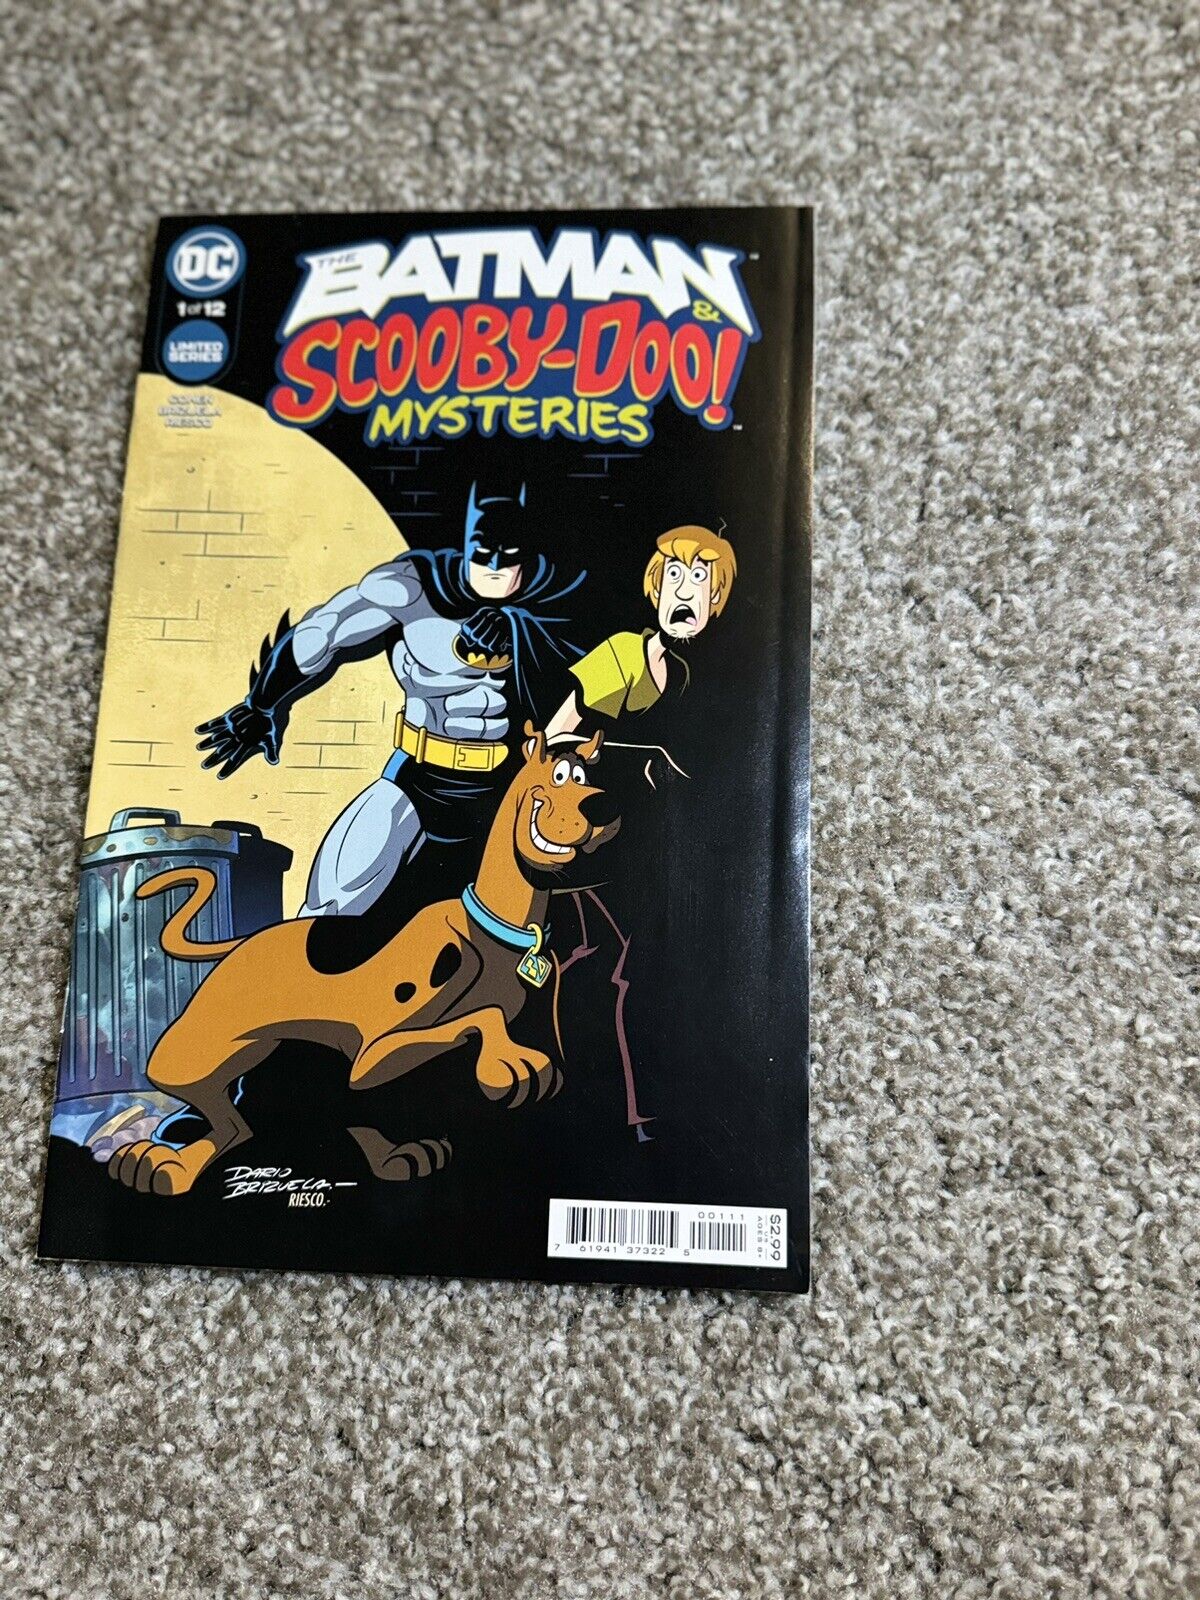 scooby doo and batman comic book 